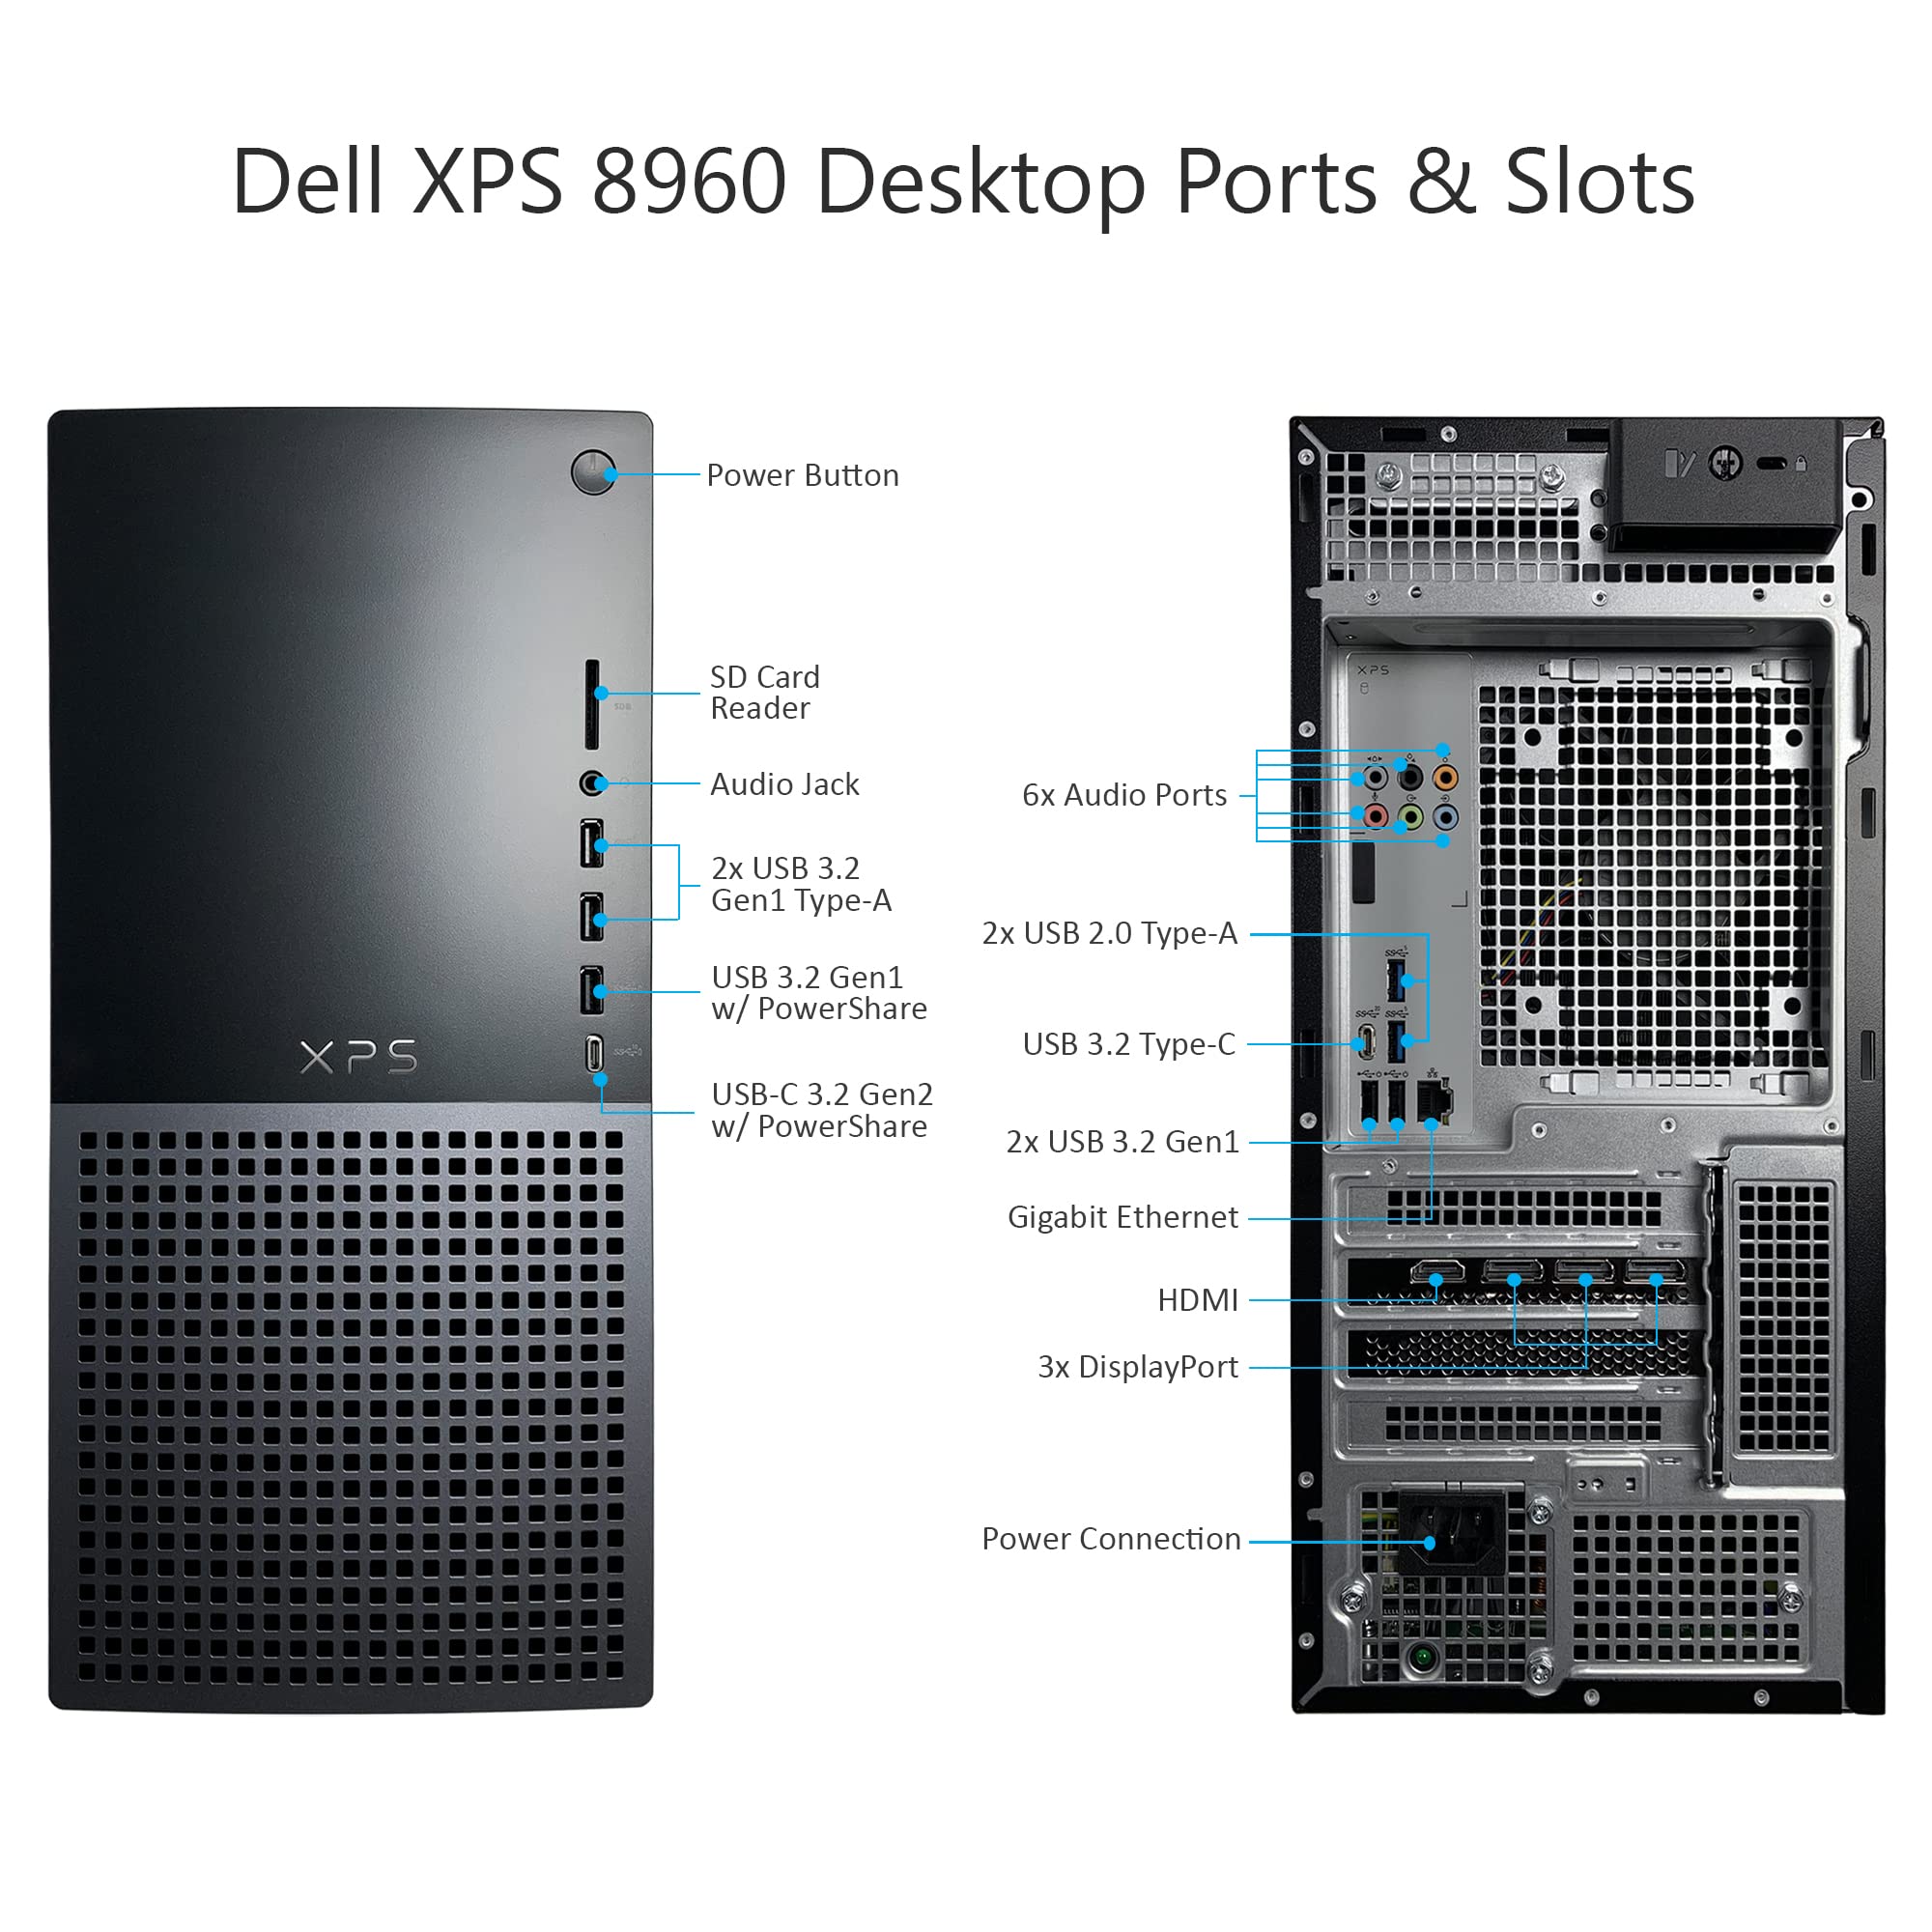 Dell XPS 8950 Gaming Desktop Computer - 12th Gen Intel Core i9-12900K up to 5.2 GHz CPU, 64GB DDR5 RAM, 1TB NVMe SSD + 2TB HDD, AMD Radeon RX 6700XT 12GB, Killer Wi-Fi 6, Windows 11 Home